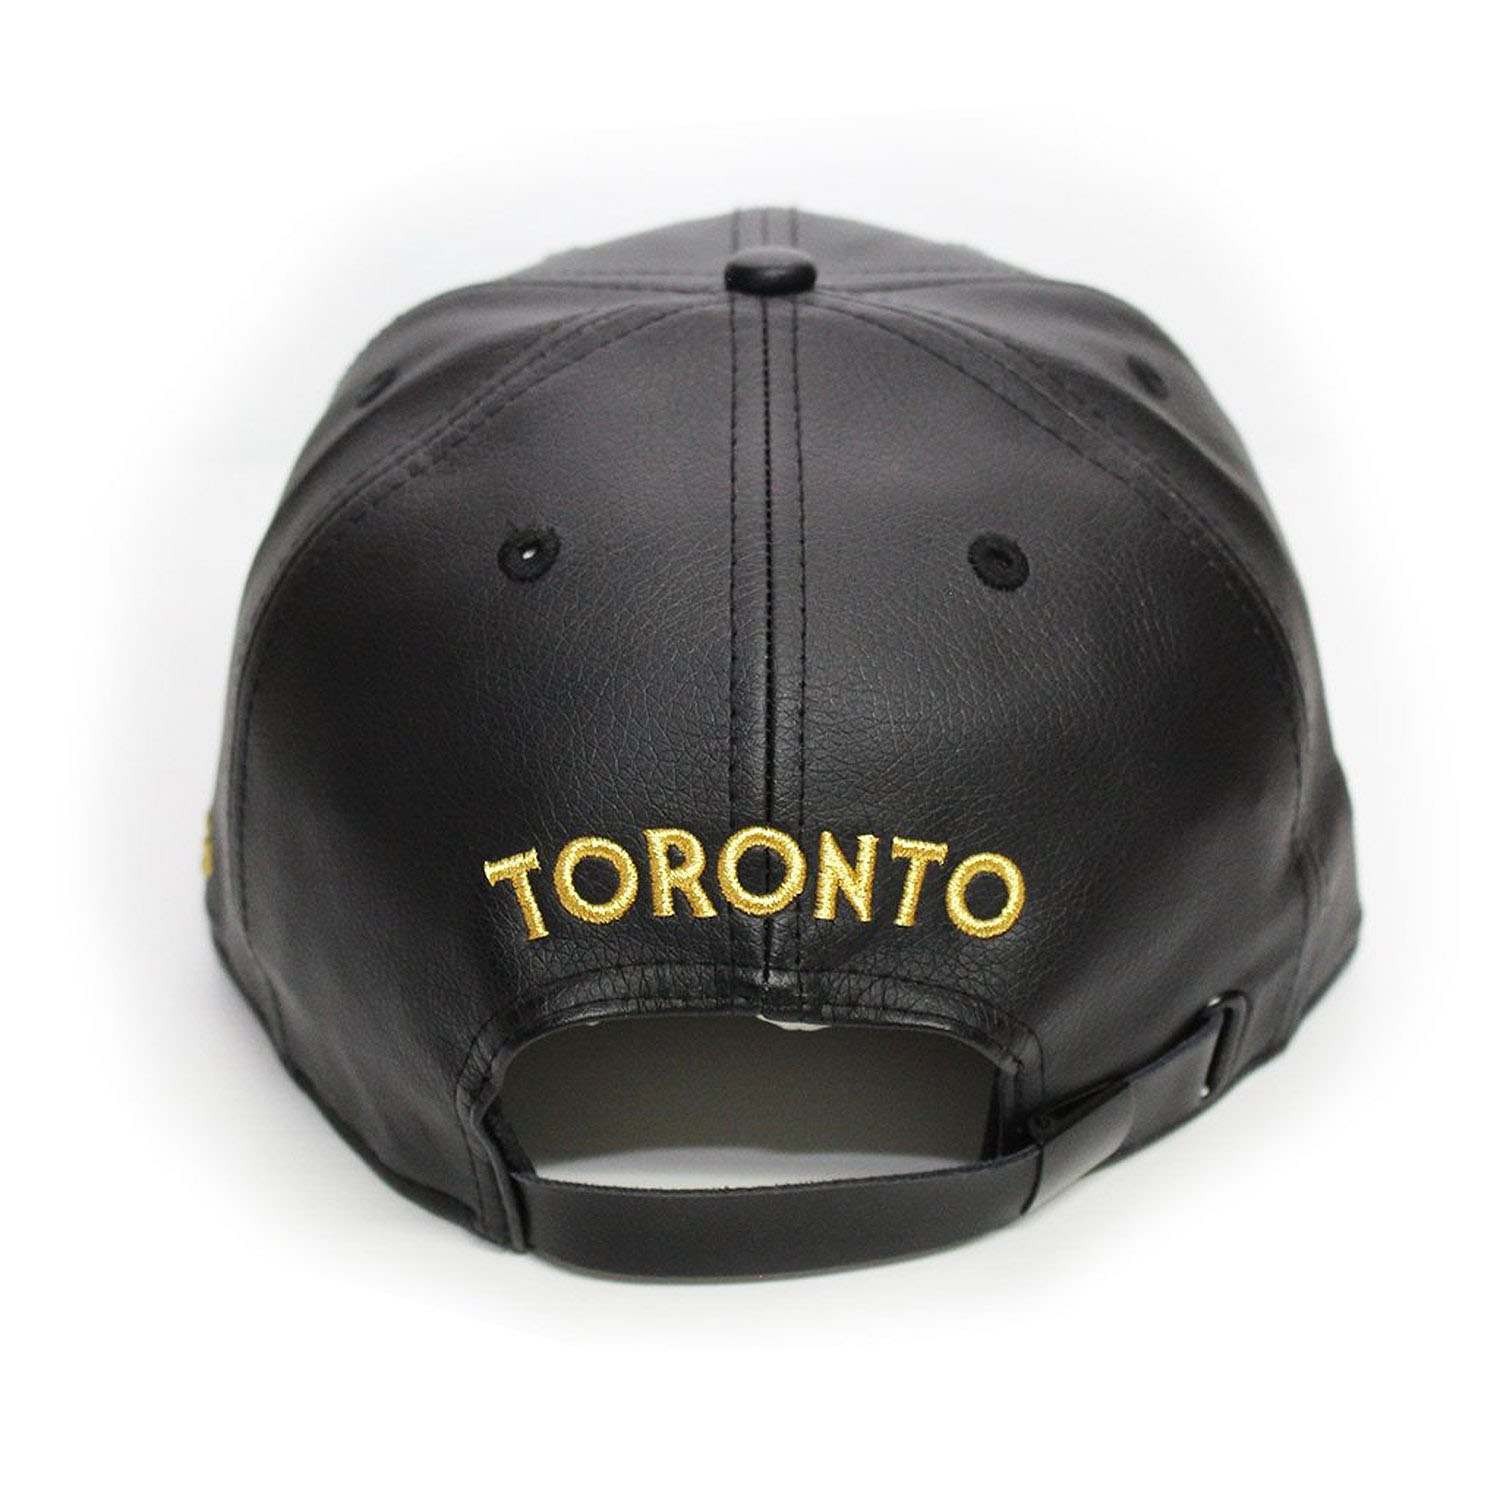 The Cap Guys Inspired Exclusives 416 Toronto Hat Design